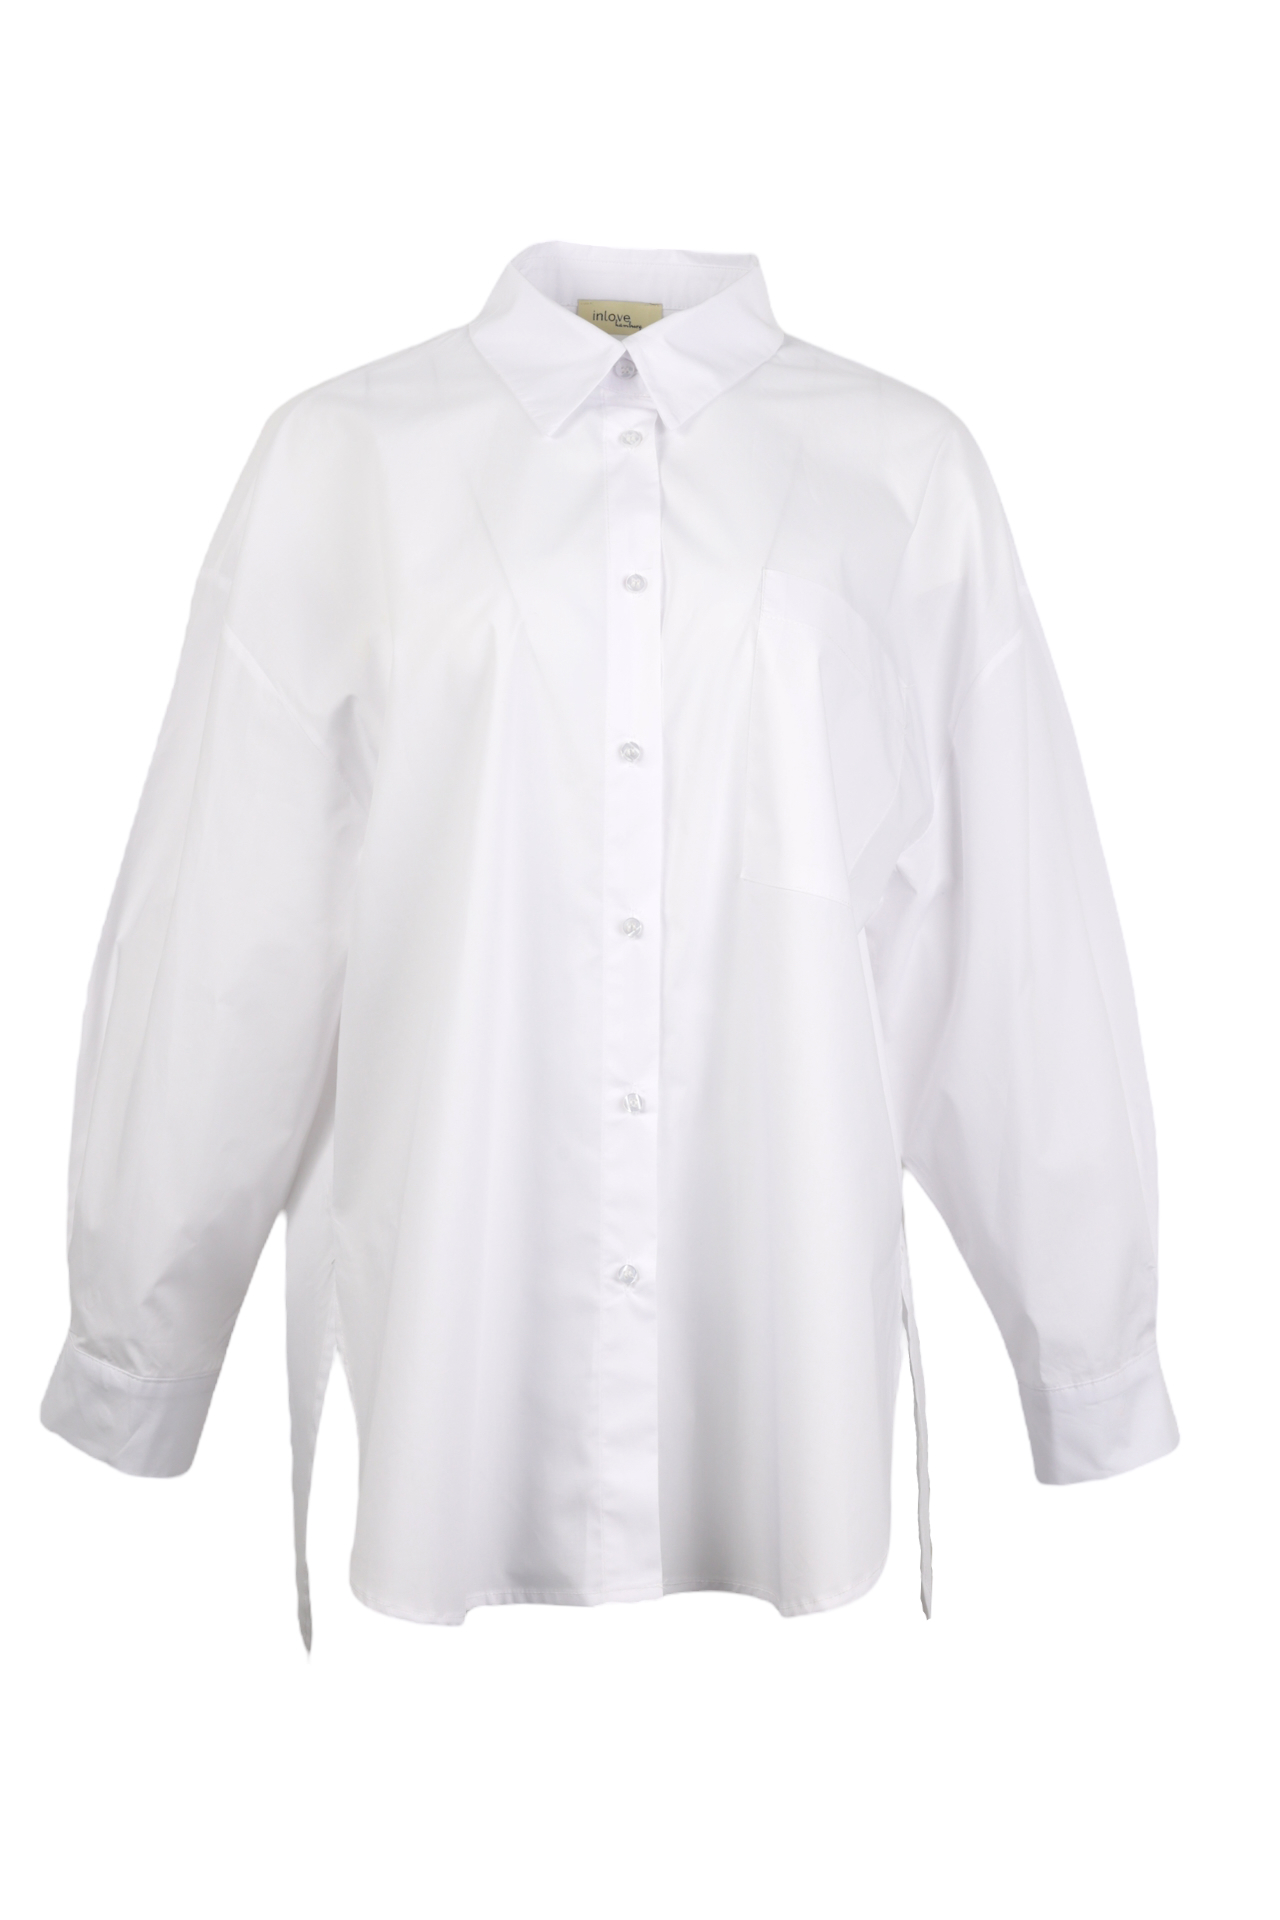 Boyfriend White Shirt 100% Cotton